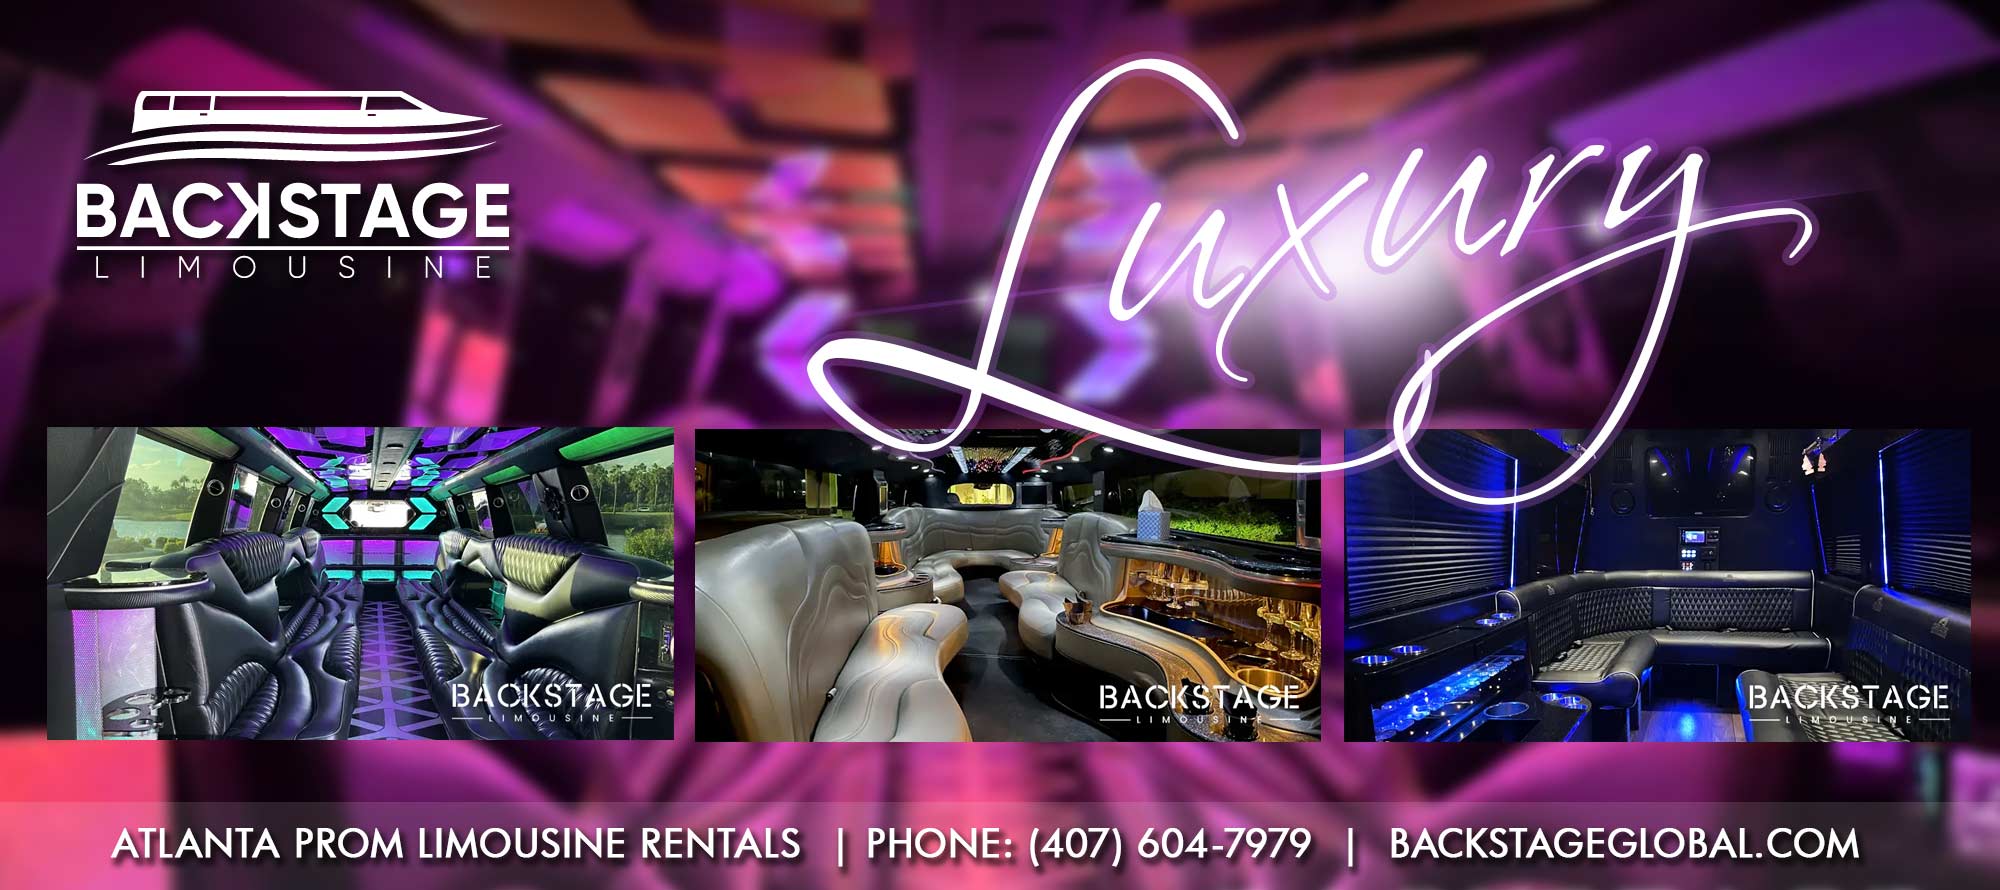 Atlanta Prom Limo Rental - Atlanta Prom Limousine Services Deals - Best Atlanta Prom Limo